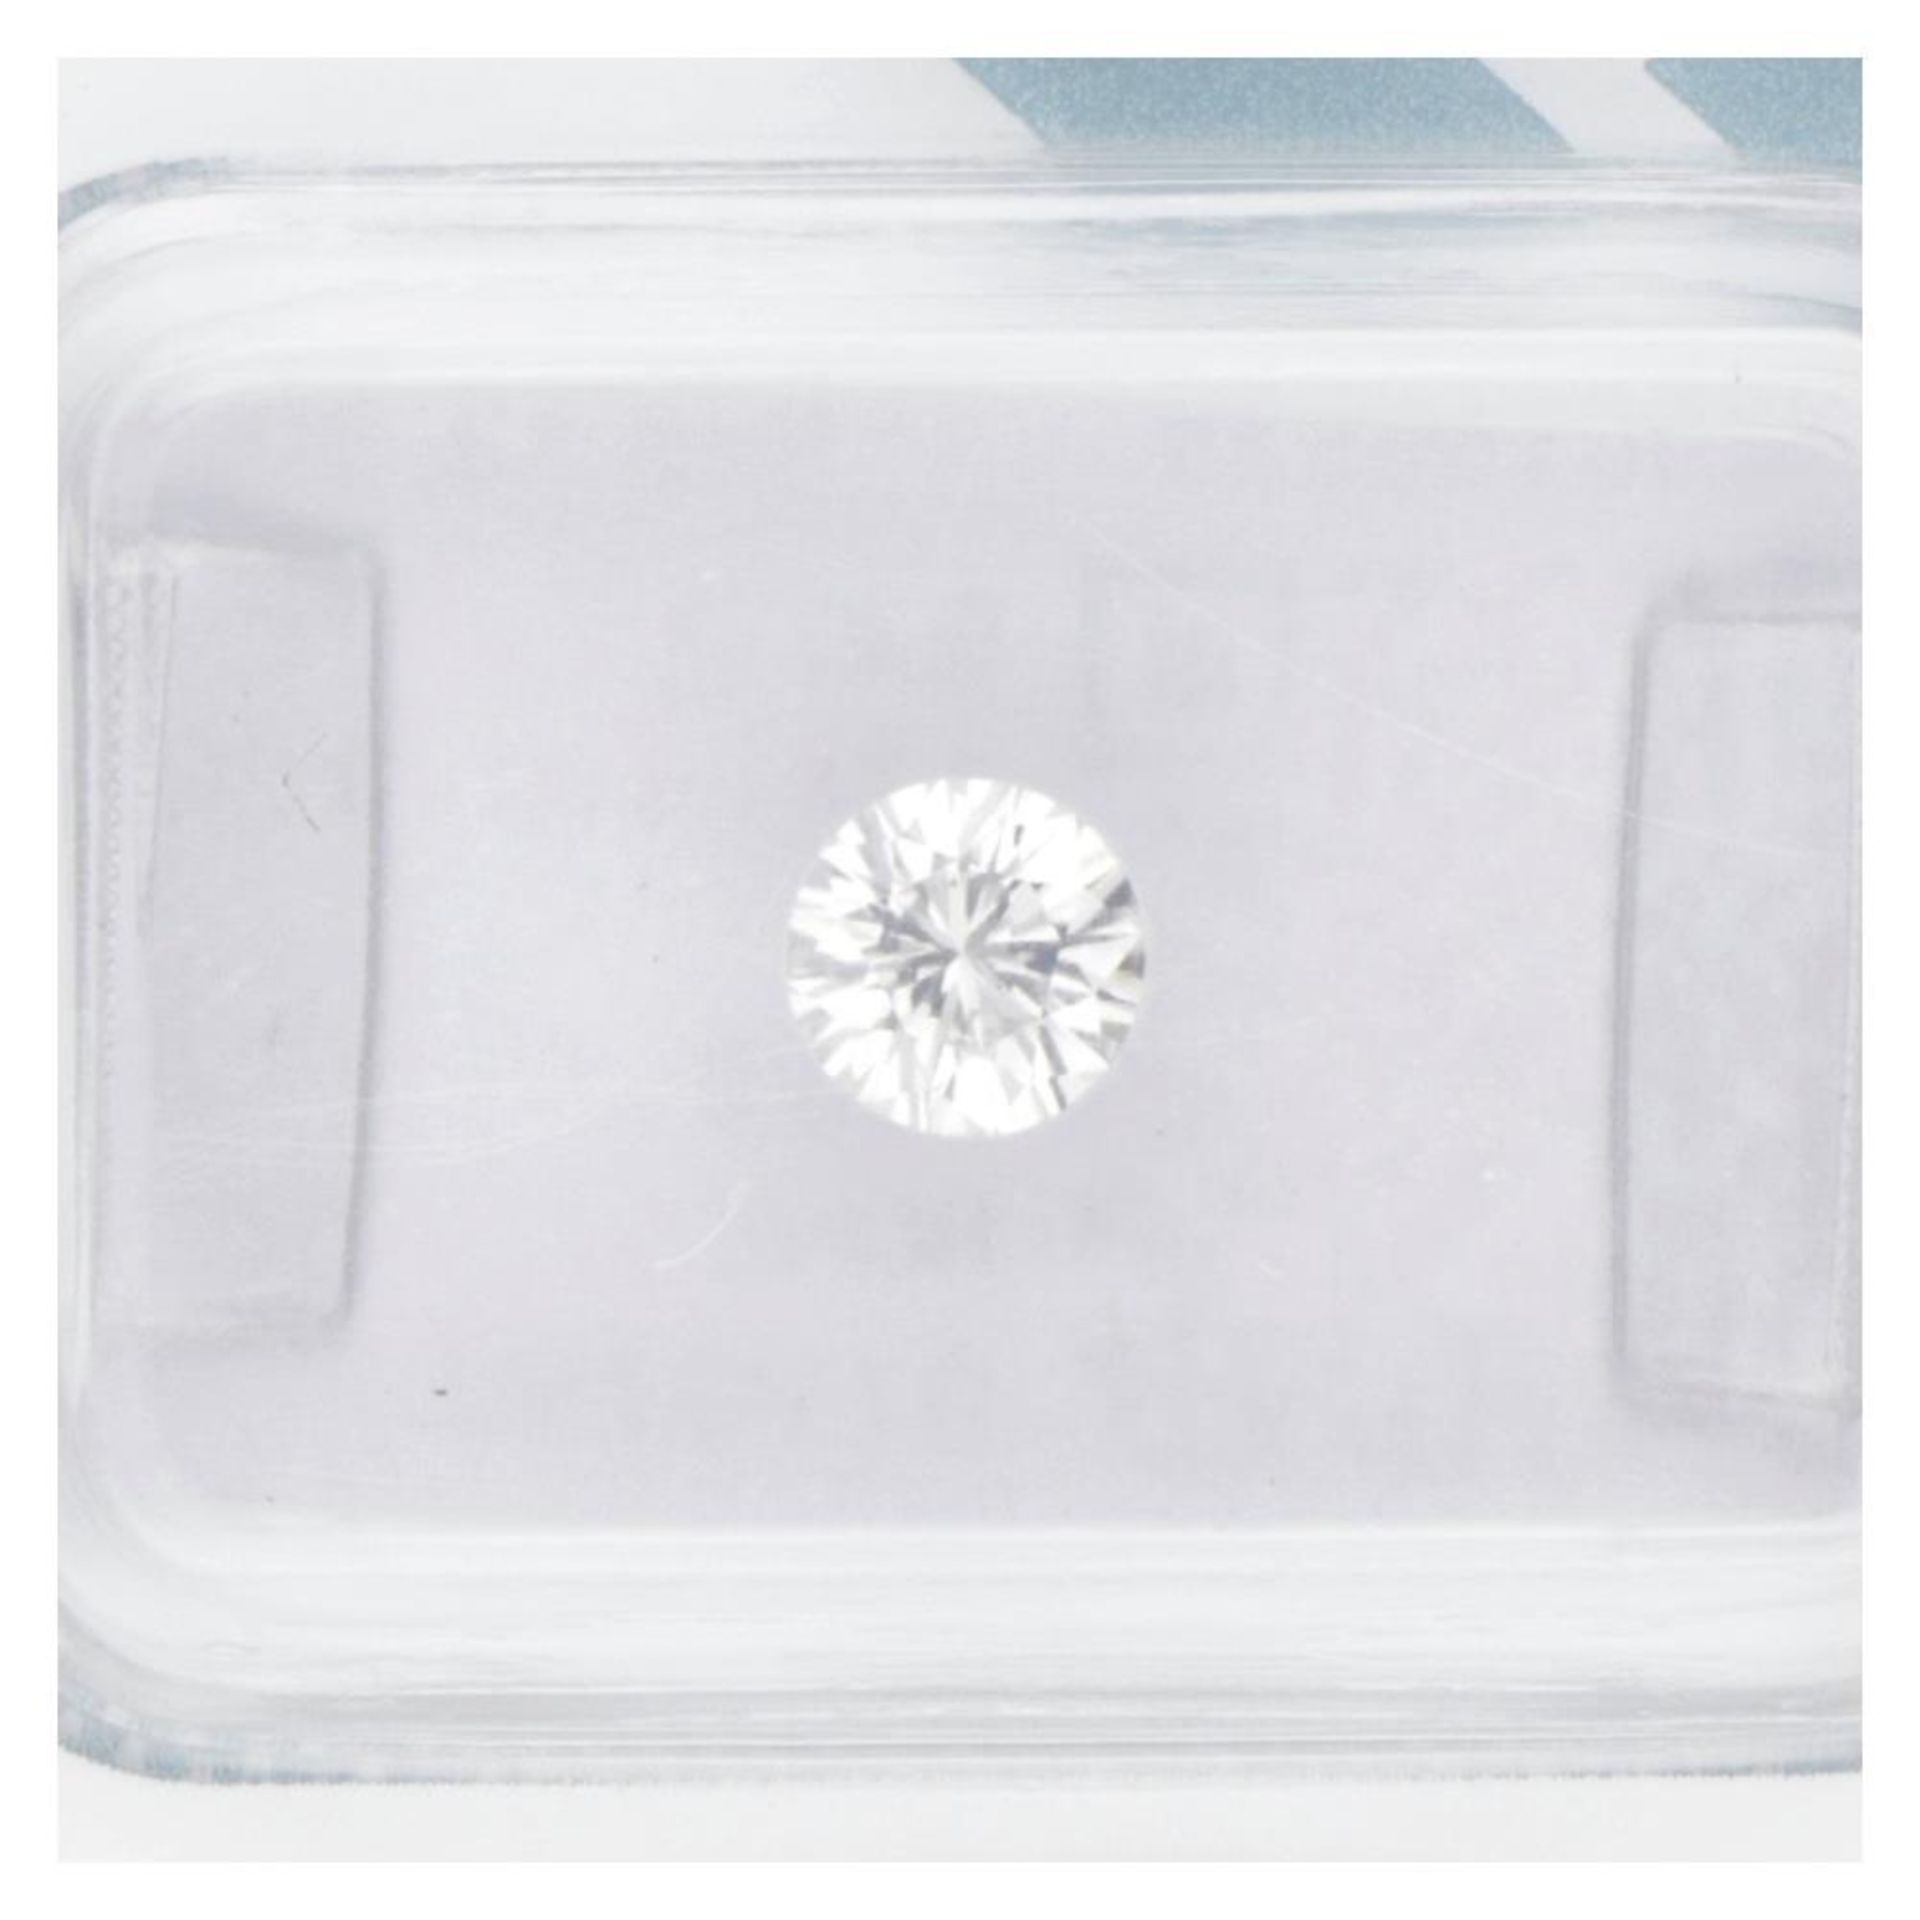 IGI certified brilliant cut natural diamond of 0.40 ct. - Image 4 of 8